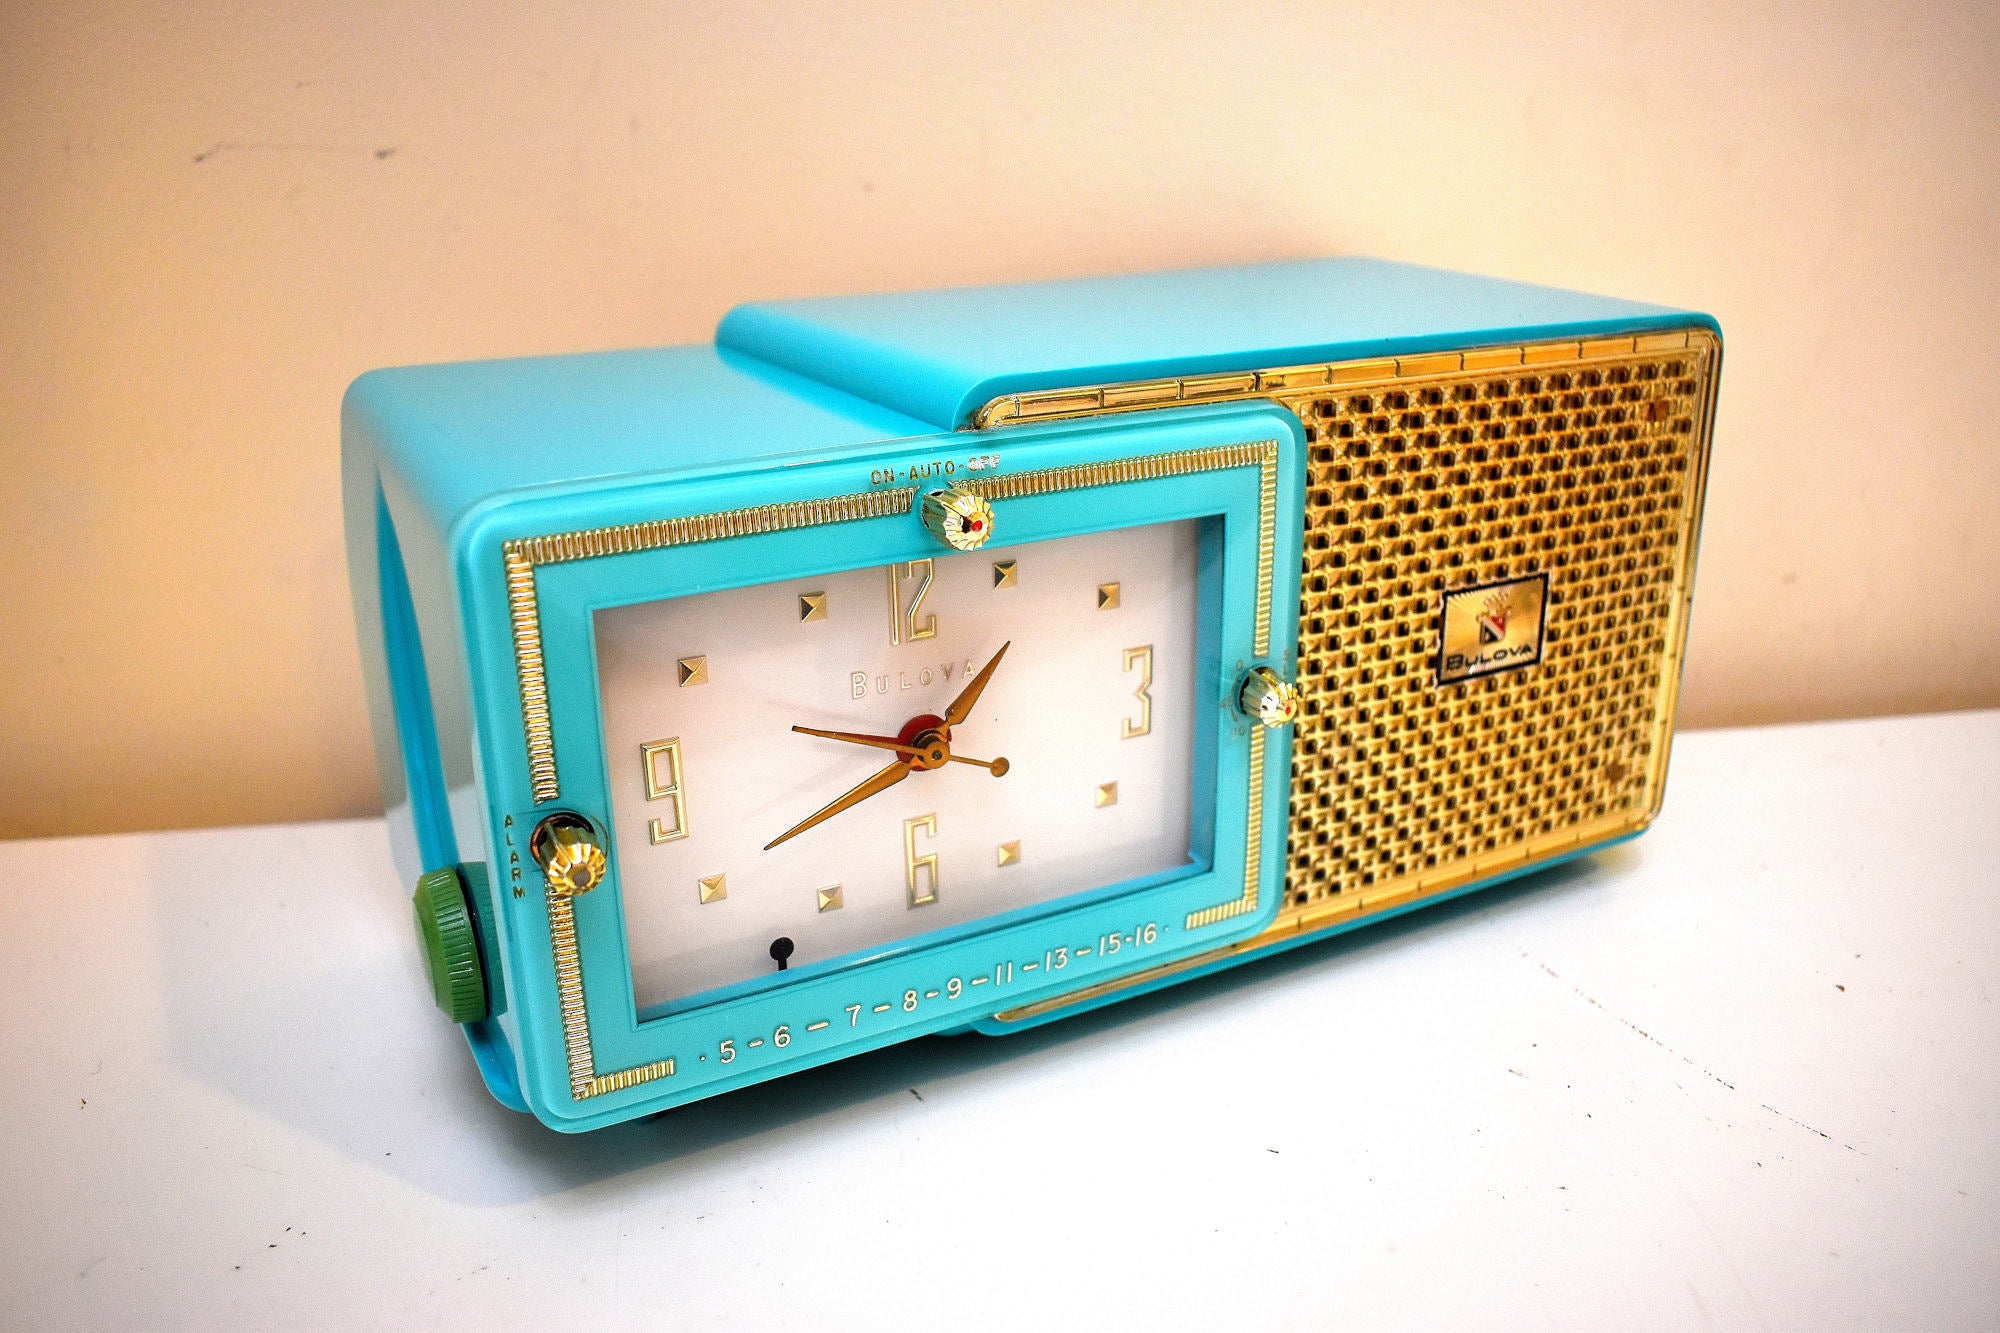 Egyptian Turquoise Gold Mid Century 1959 Bulova Model 120 Tube AM Clock Radio Excellent Condition!